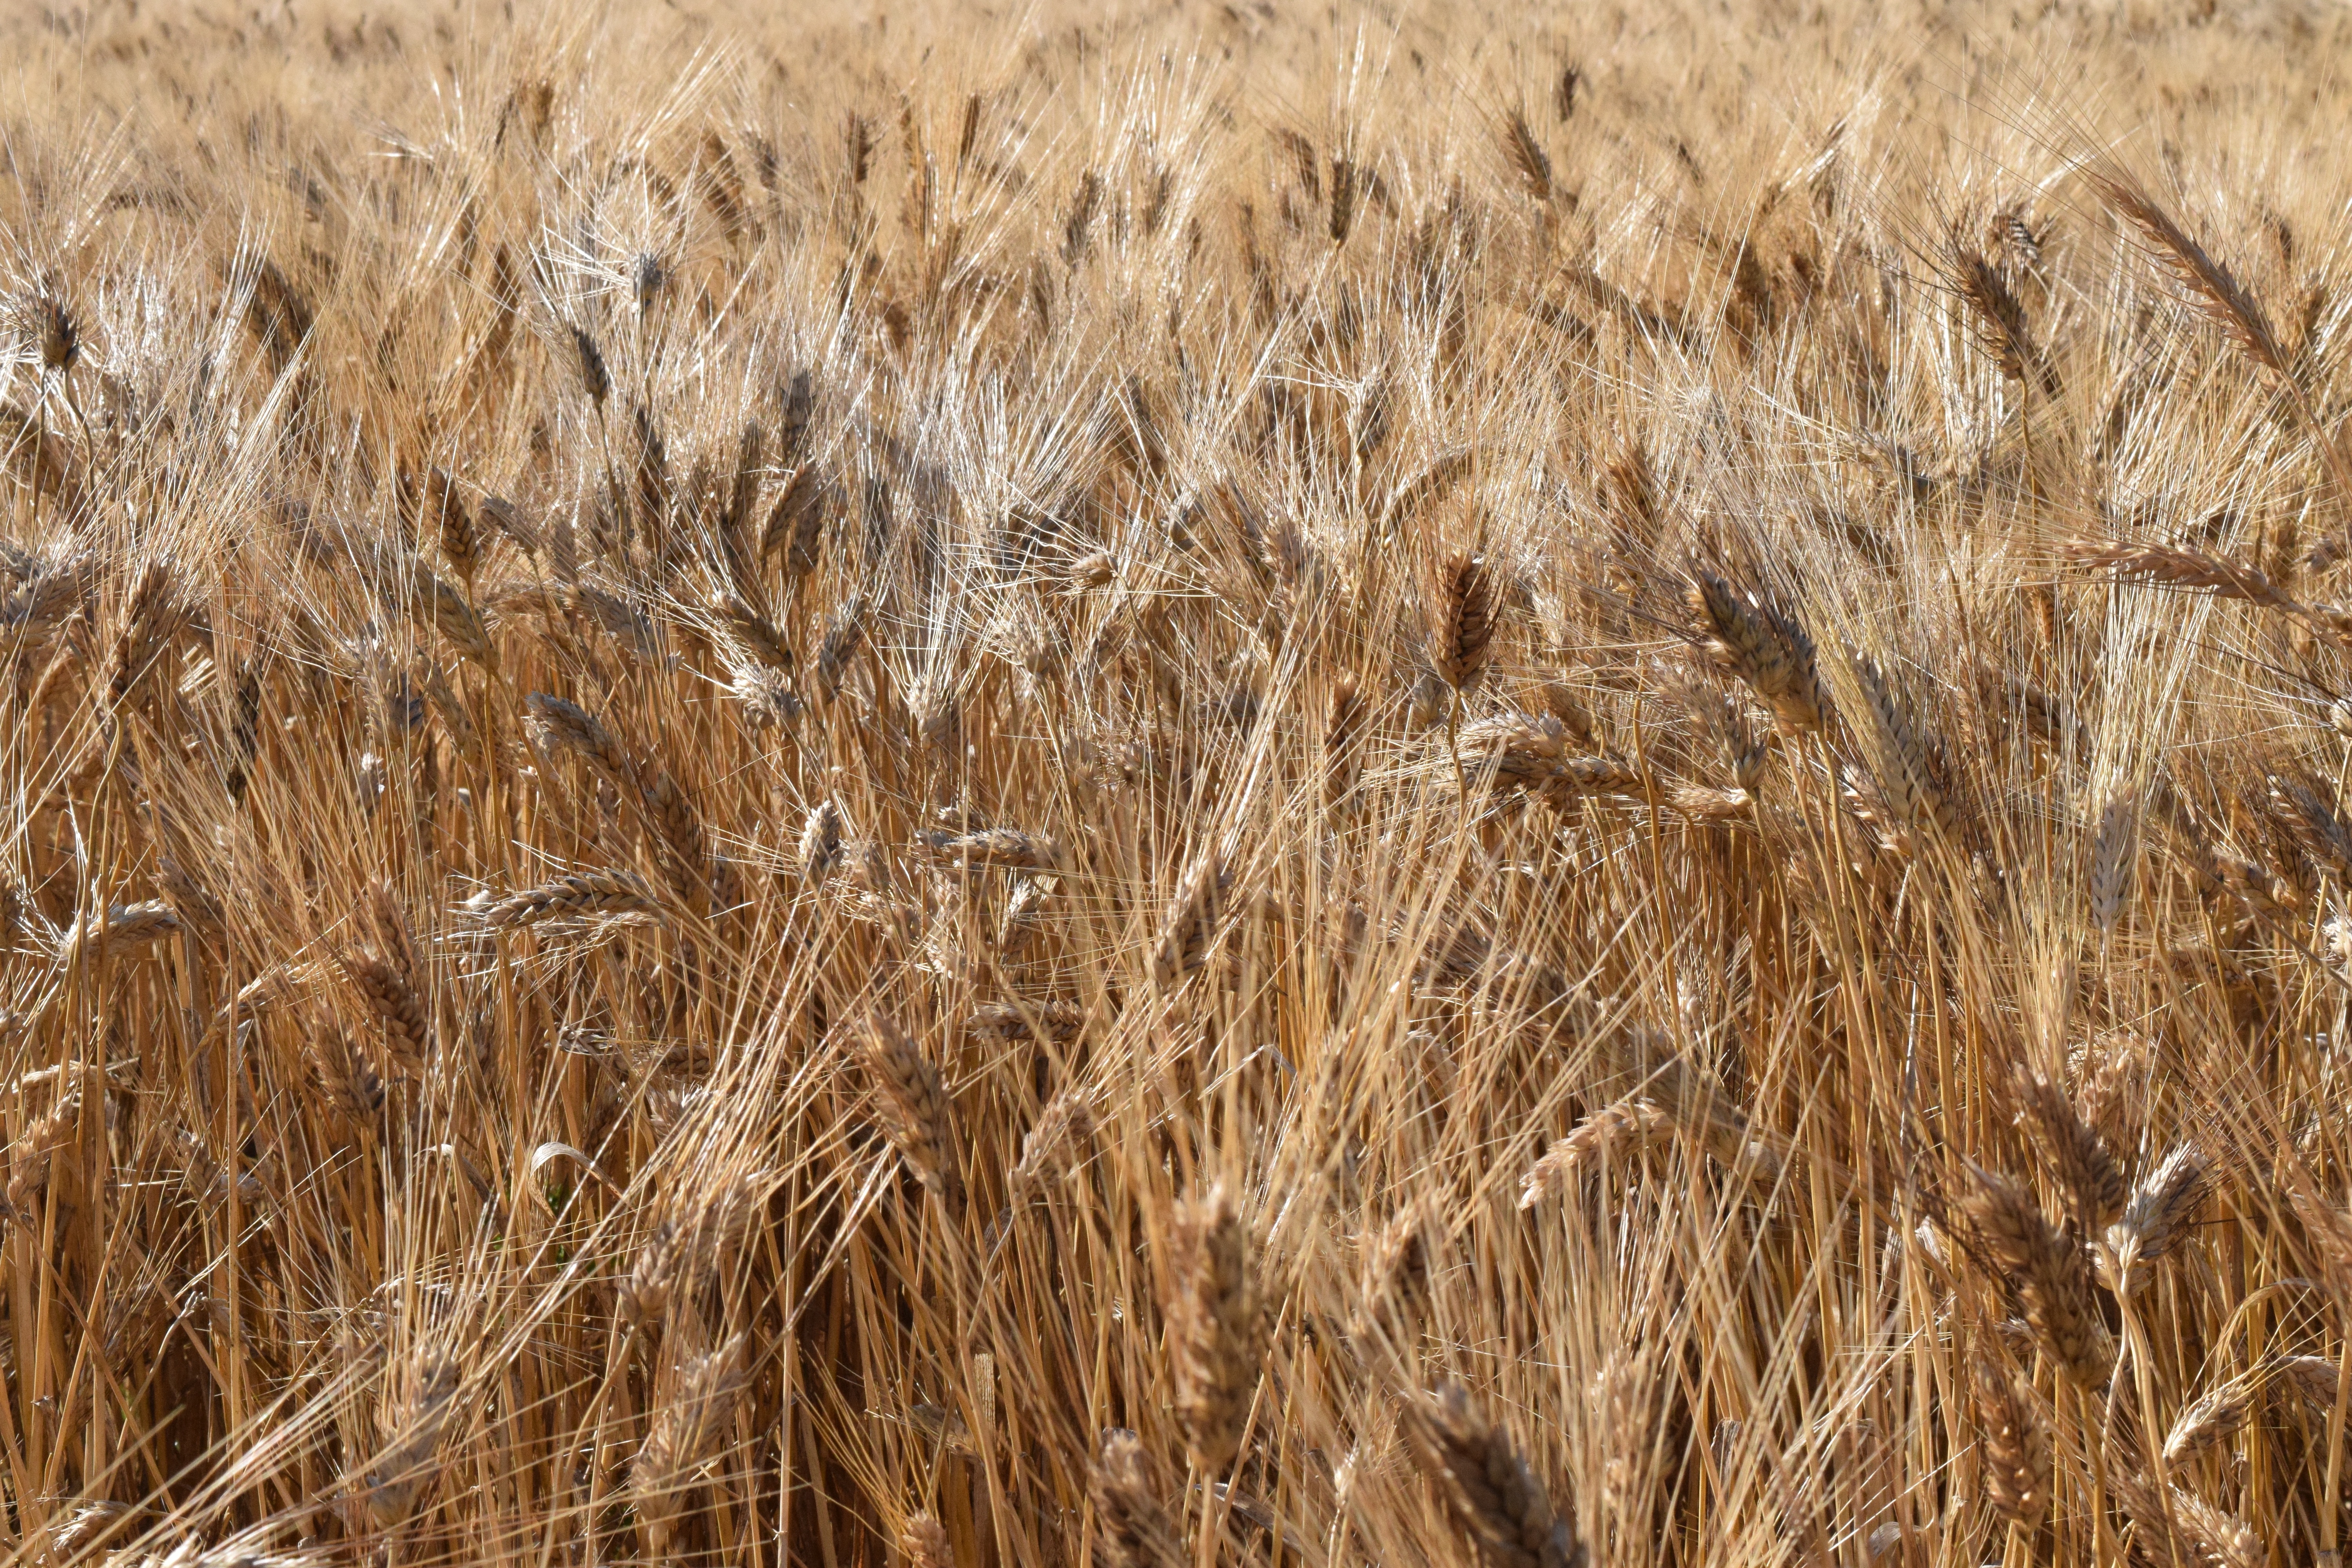 photo of wheat field